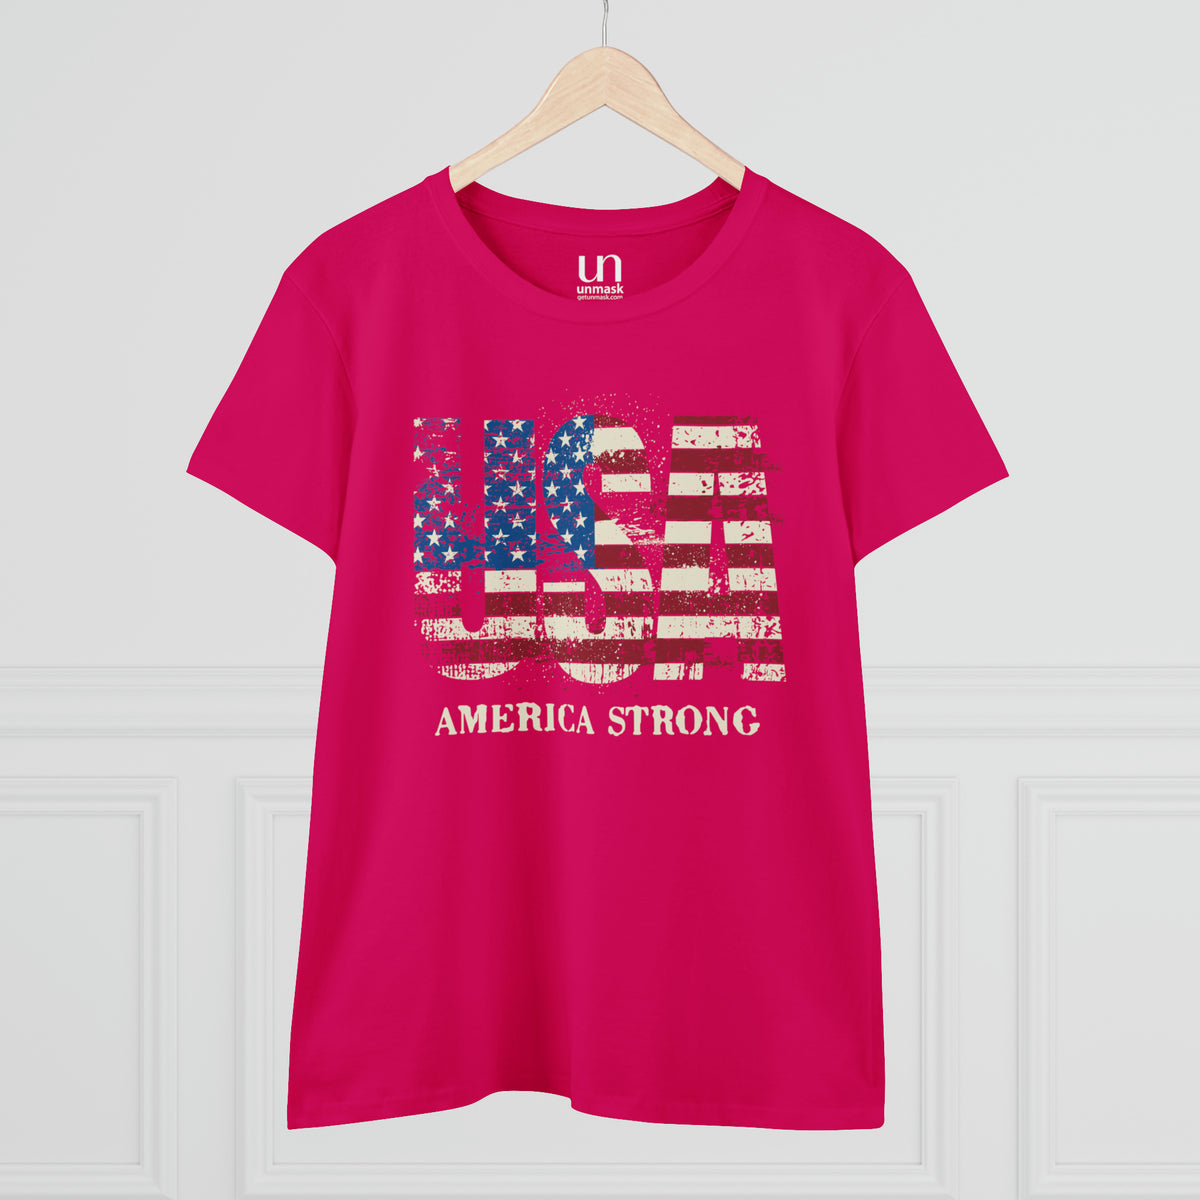 America Strong Women's Tee